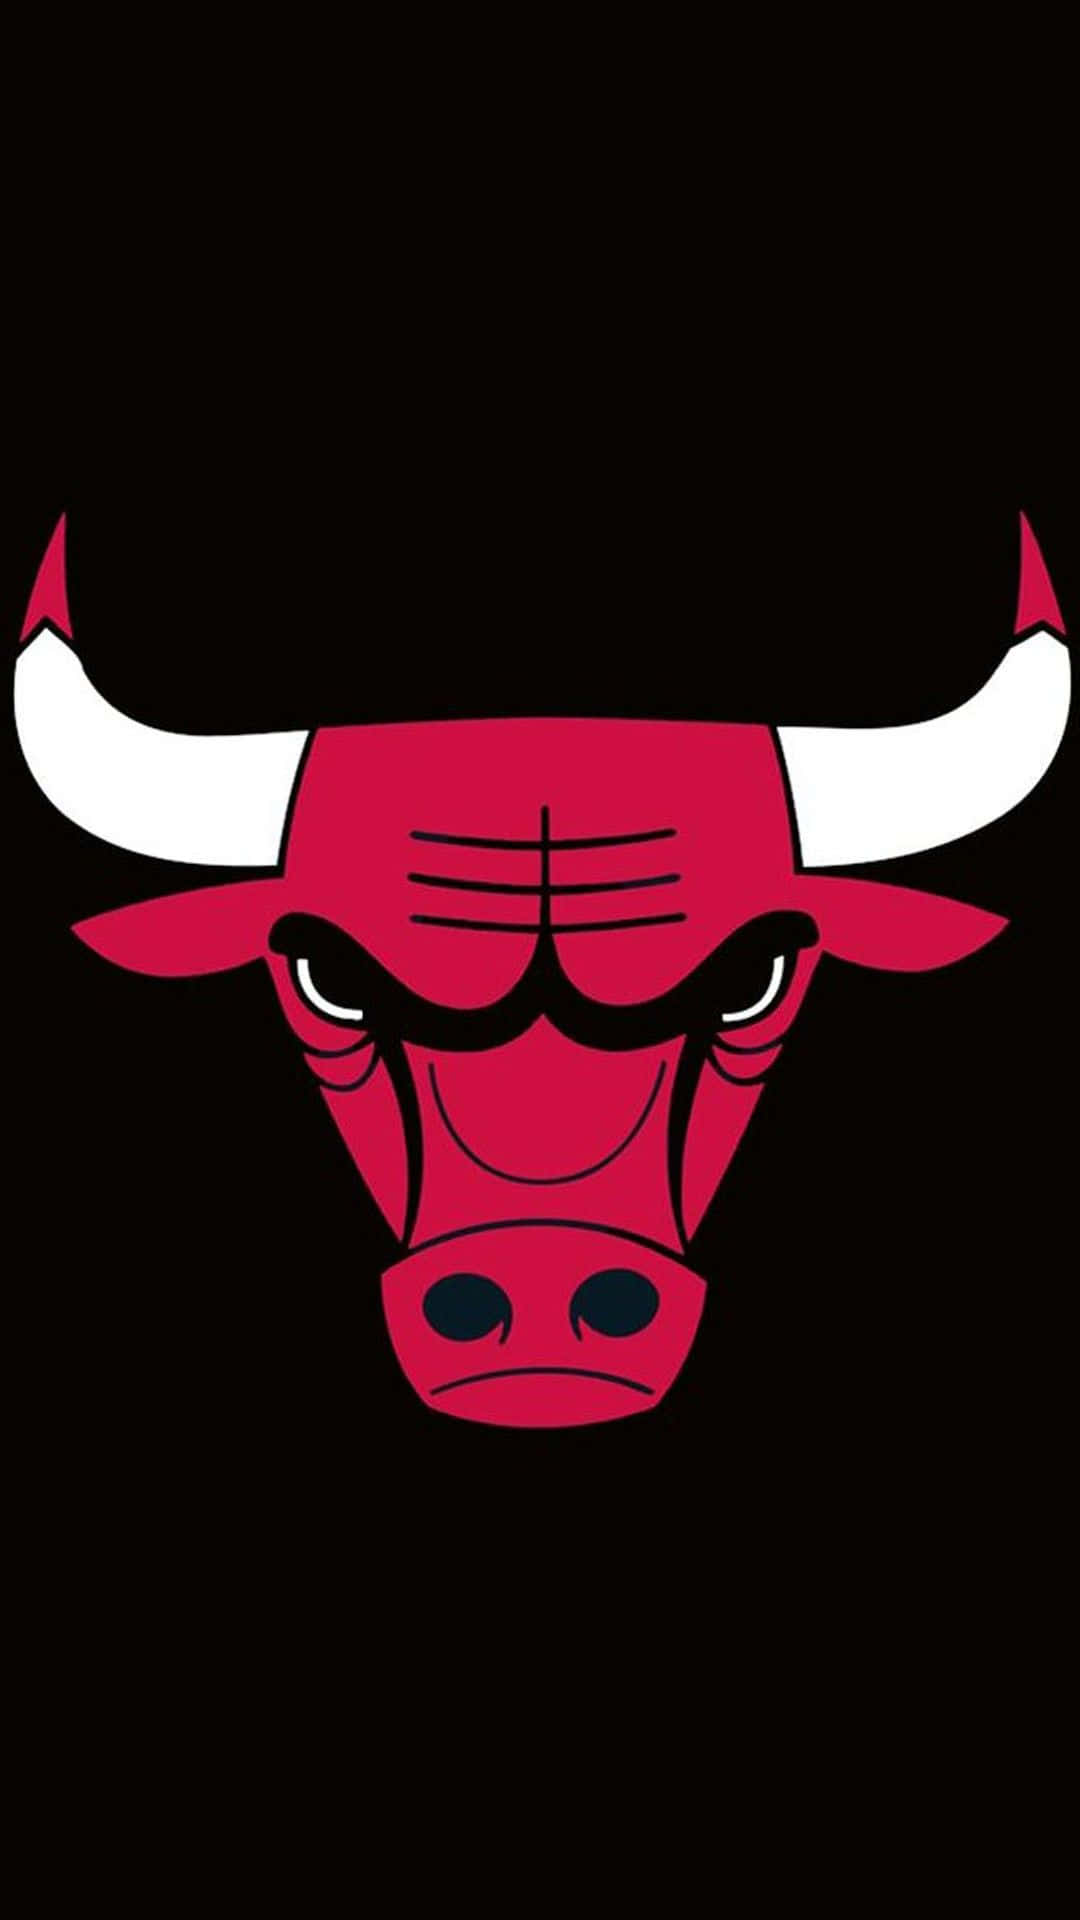 The Chicago Bulls Logo On A Black Background Wallpaper